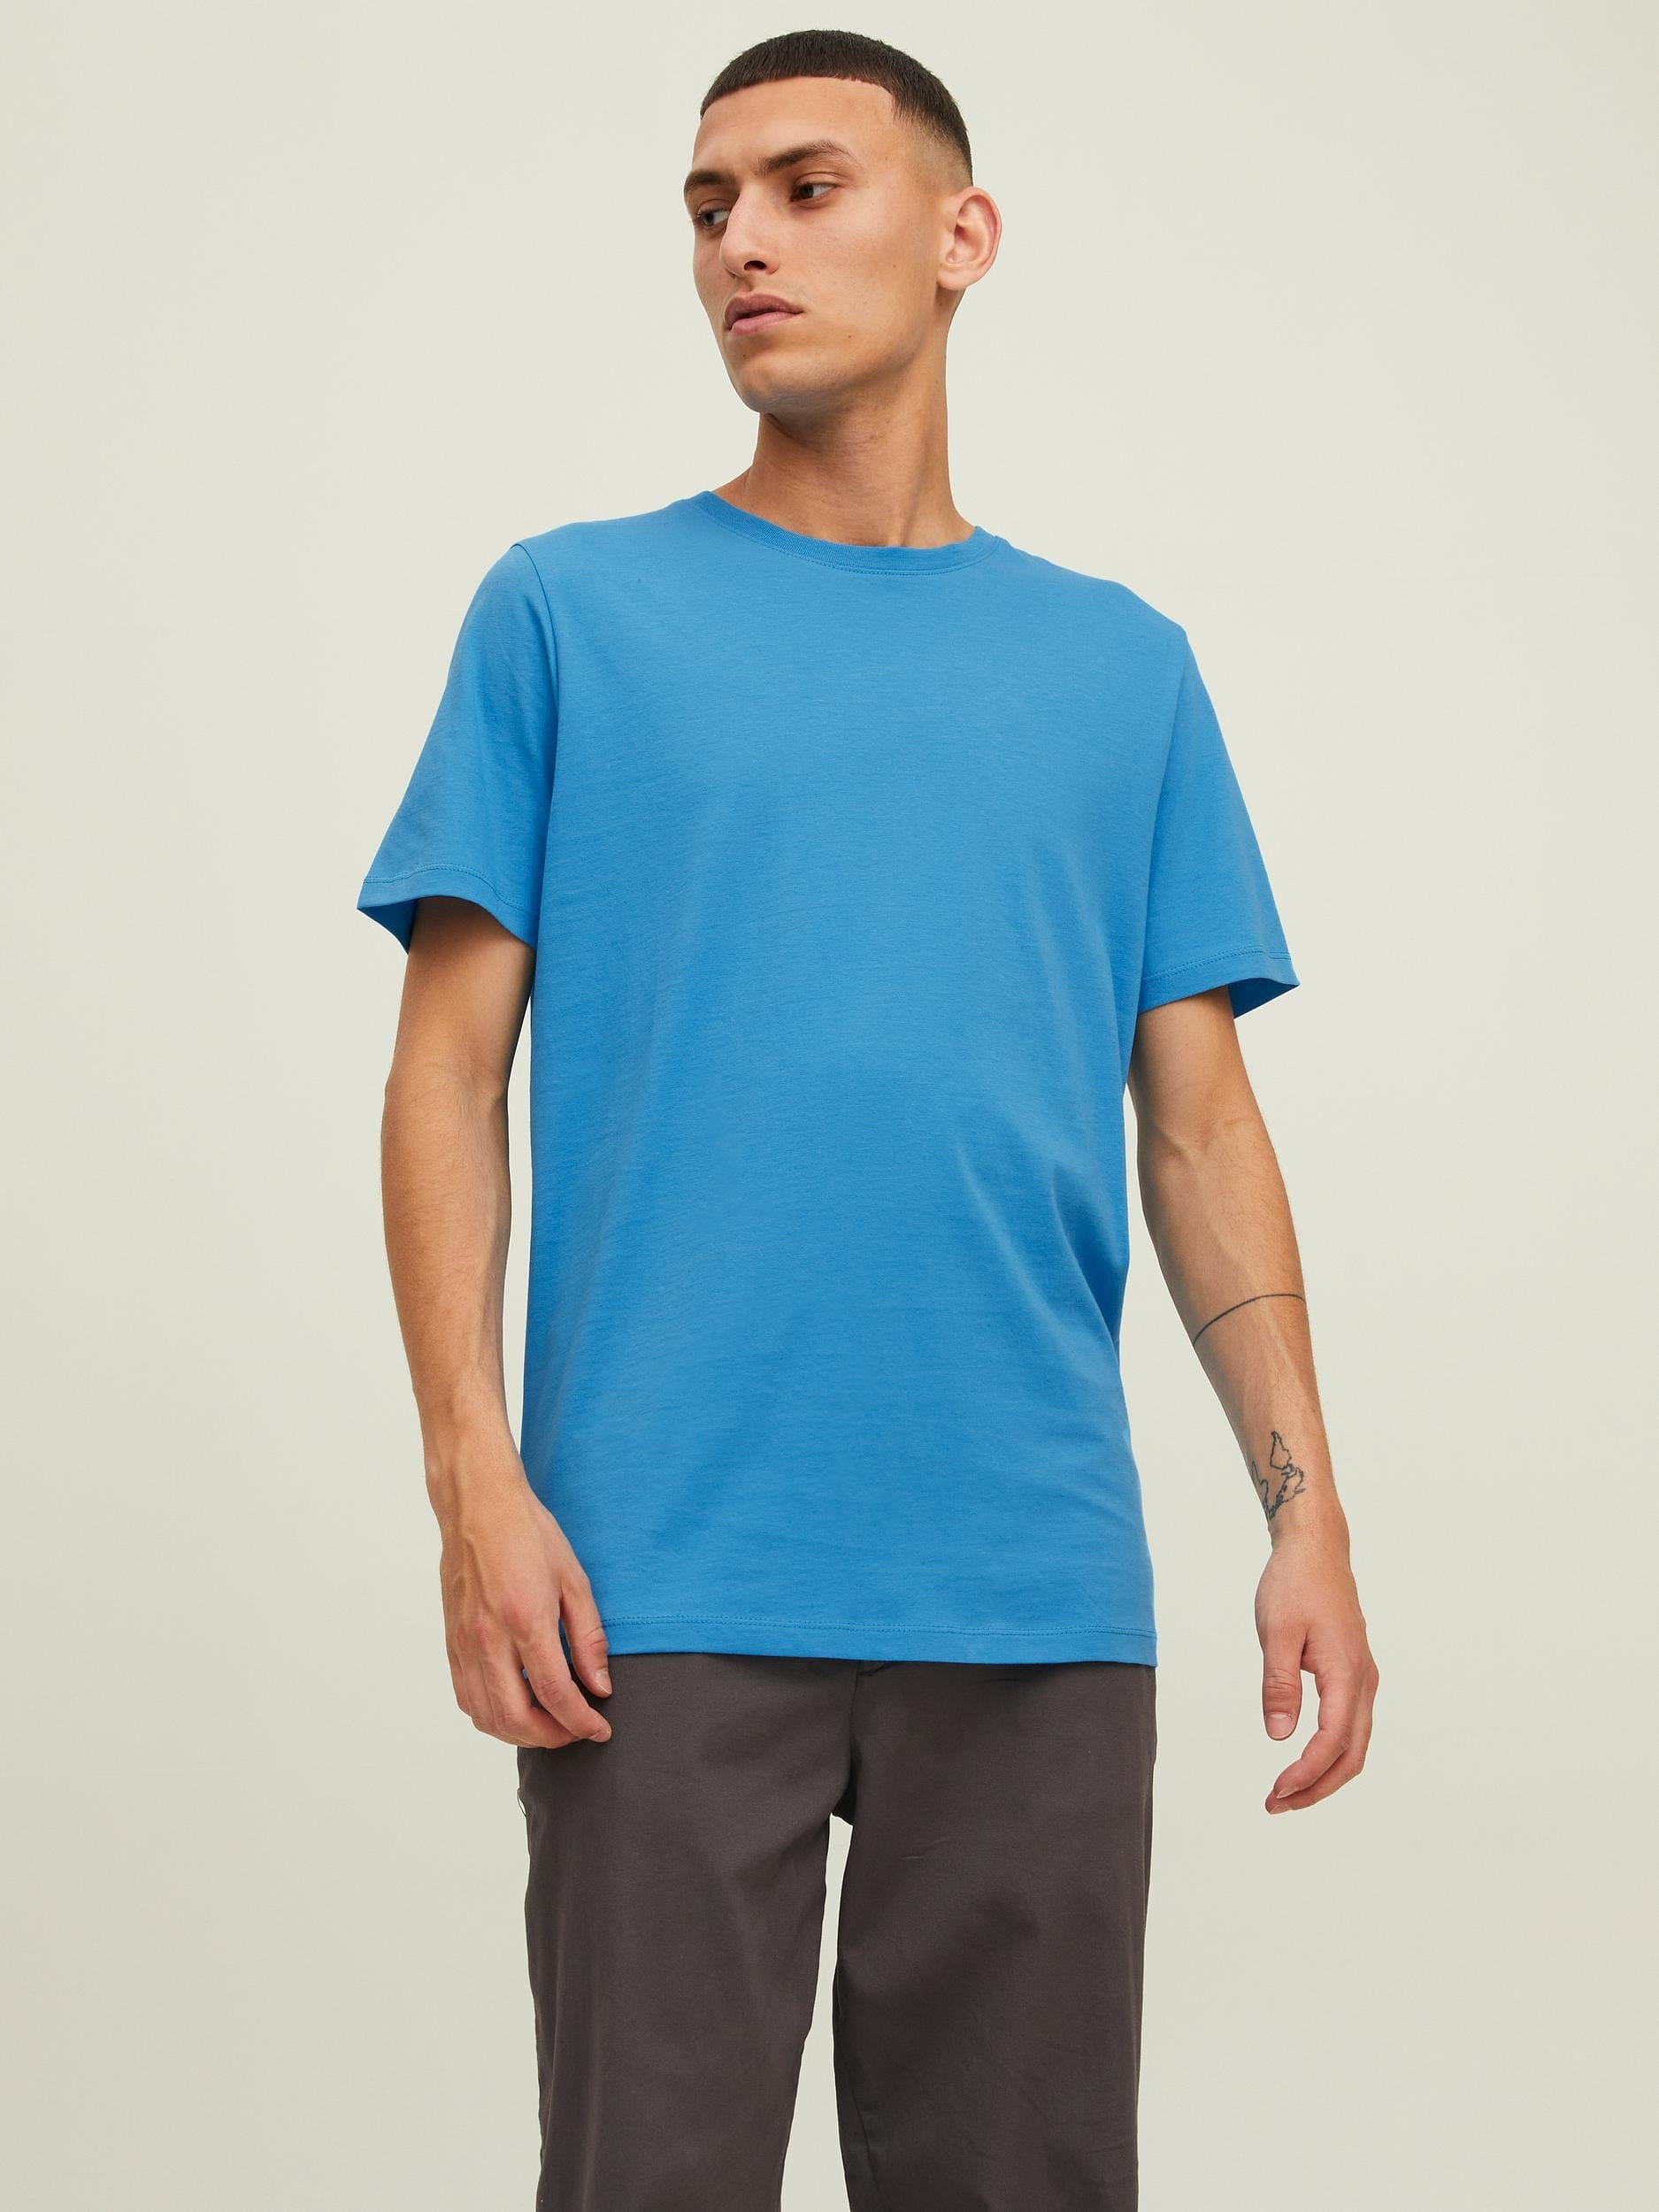 JACK JONES Camisa Básica Color Azul Talla L